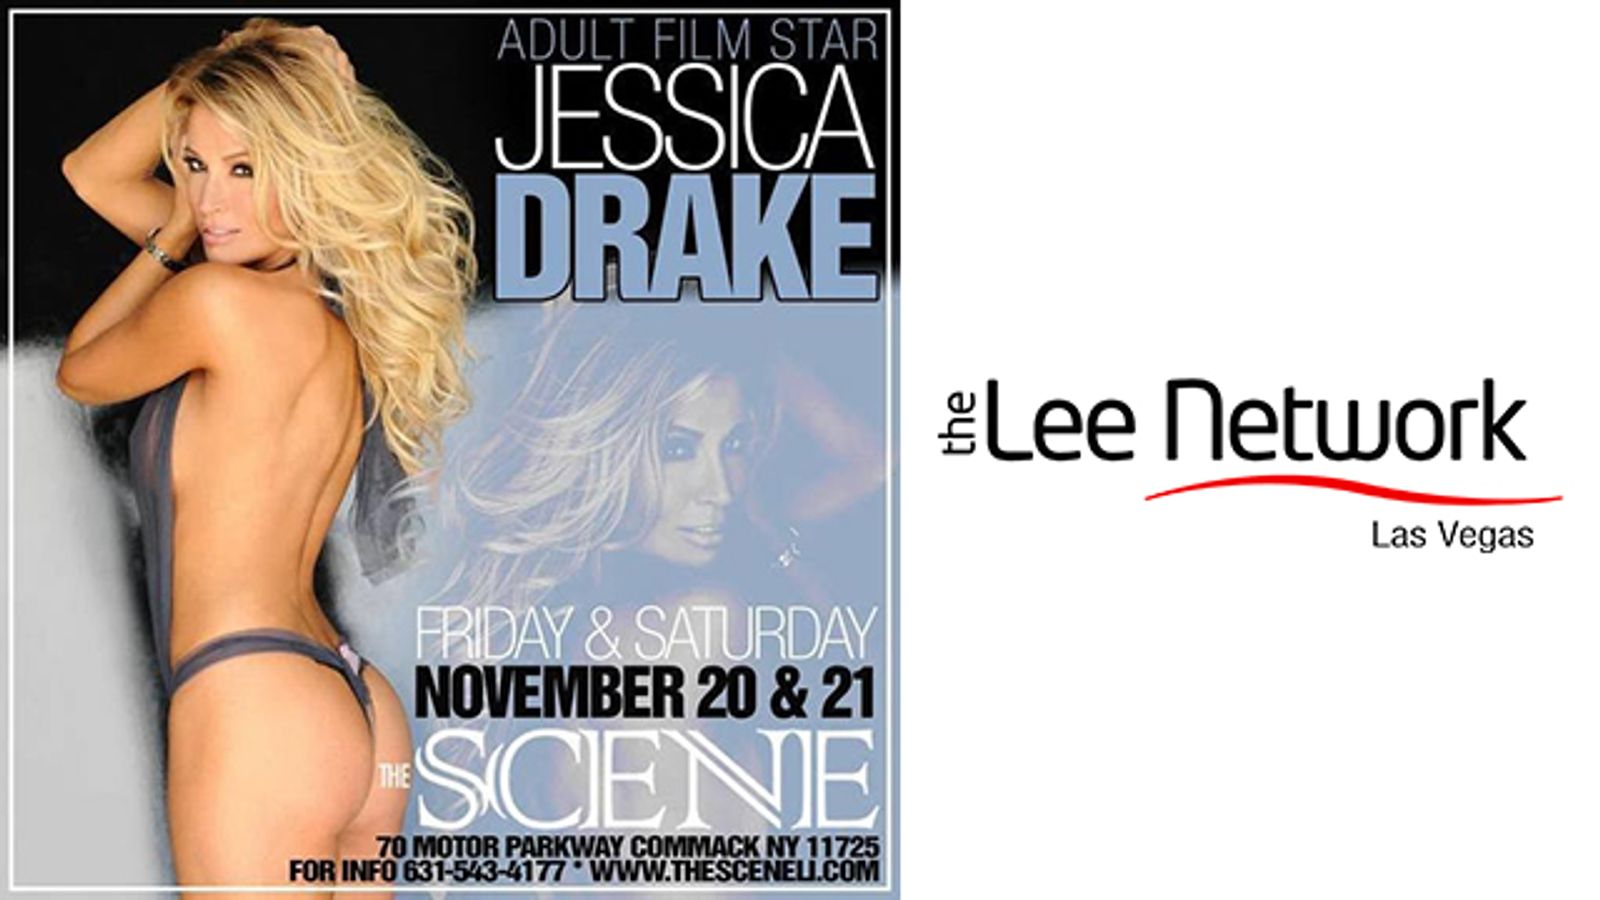 Jessica Drake to Headline The Scene, Long Island Gentlemen's Club